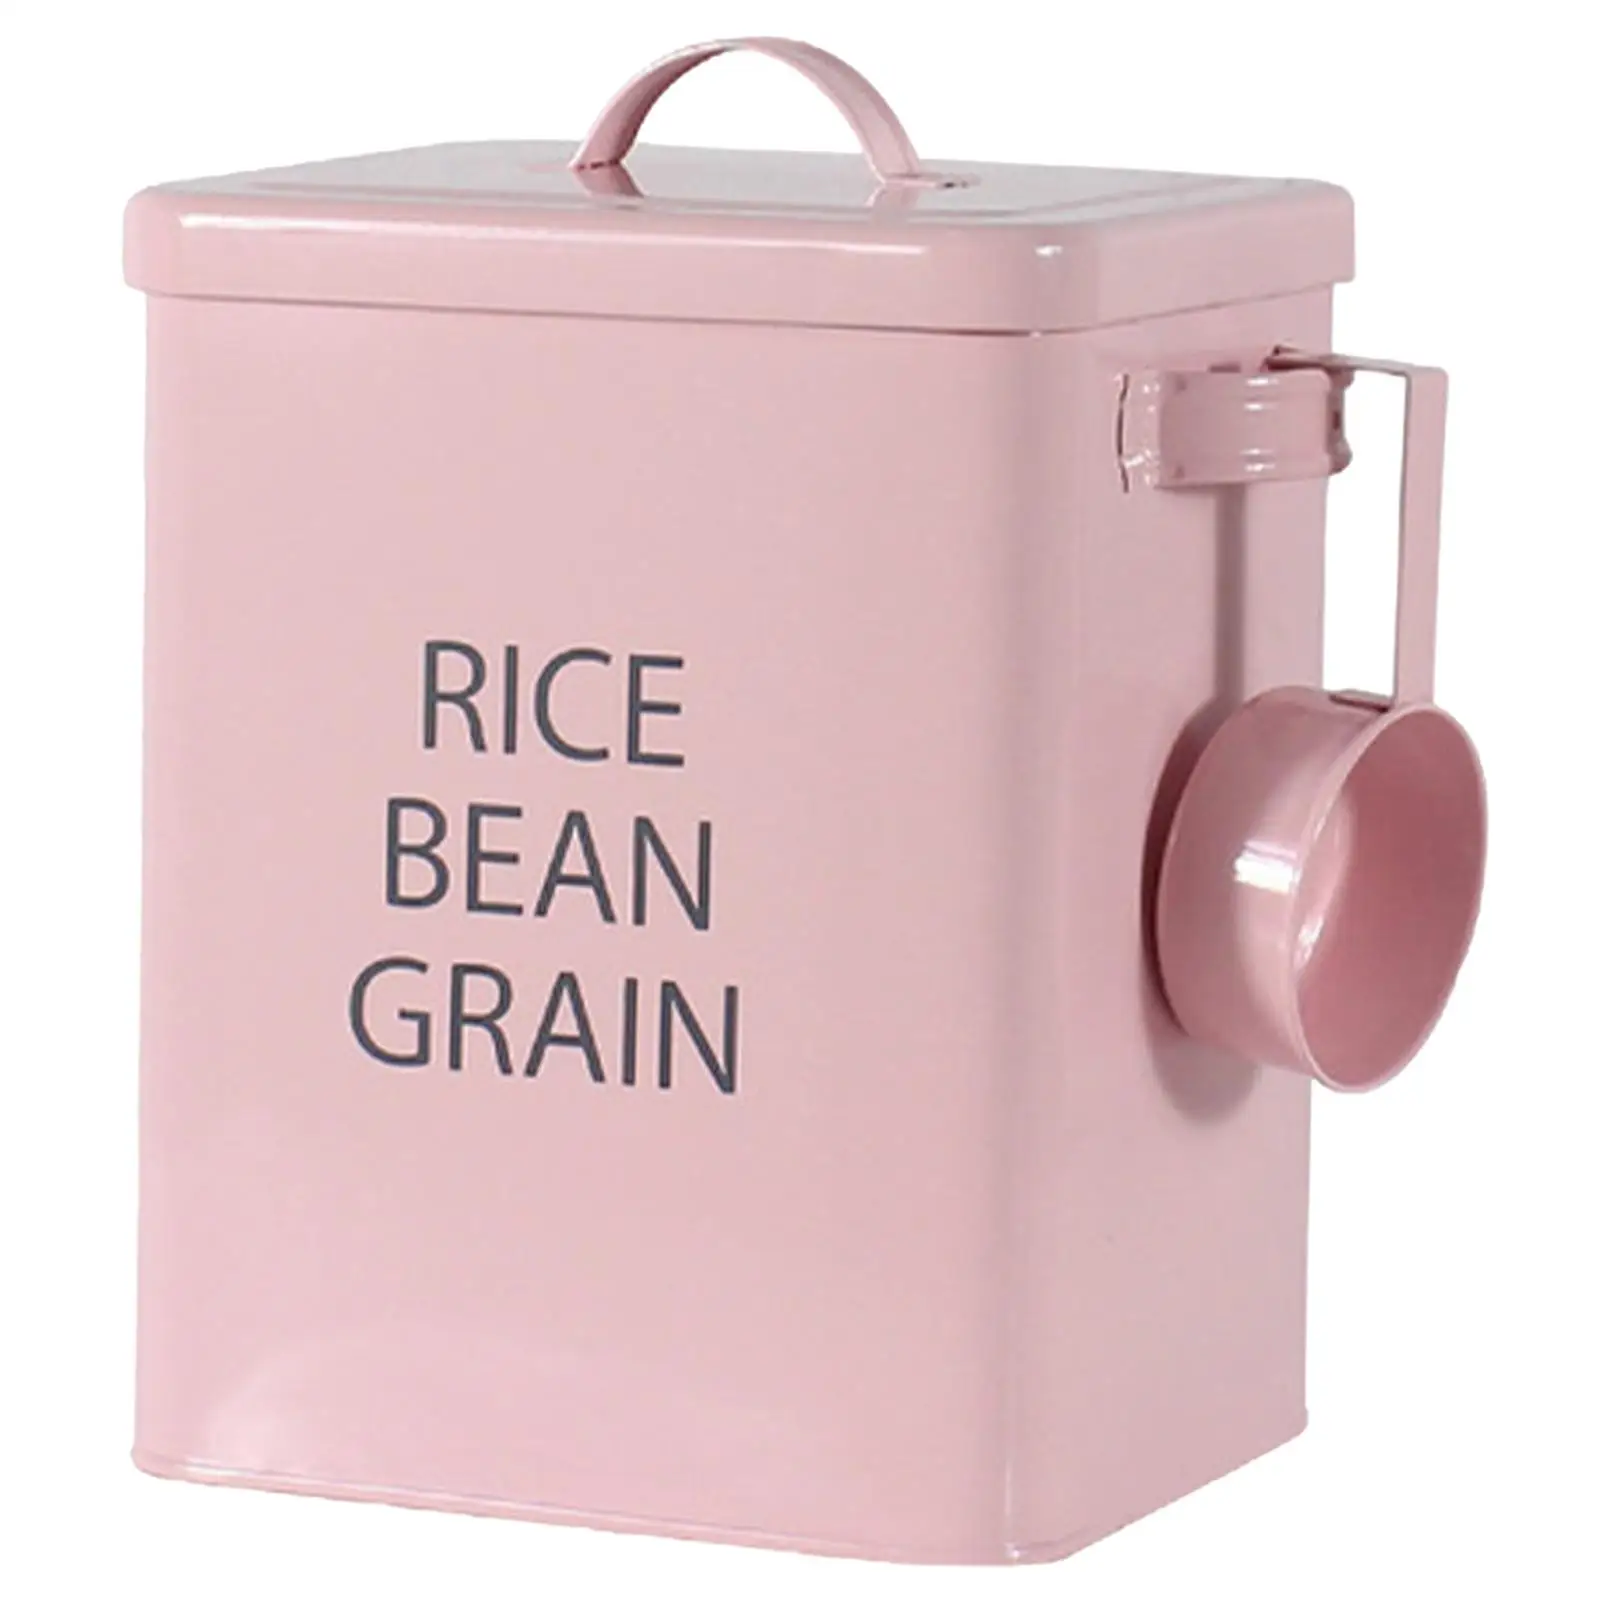 Storage Bucket with Spoon for Dry Food Pet Food Washing Powder Organizer